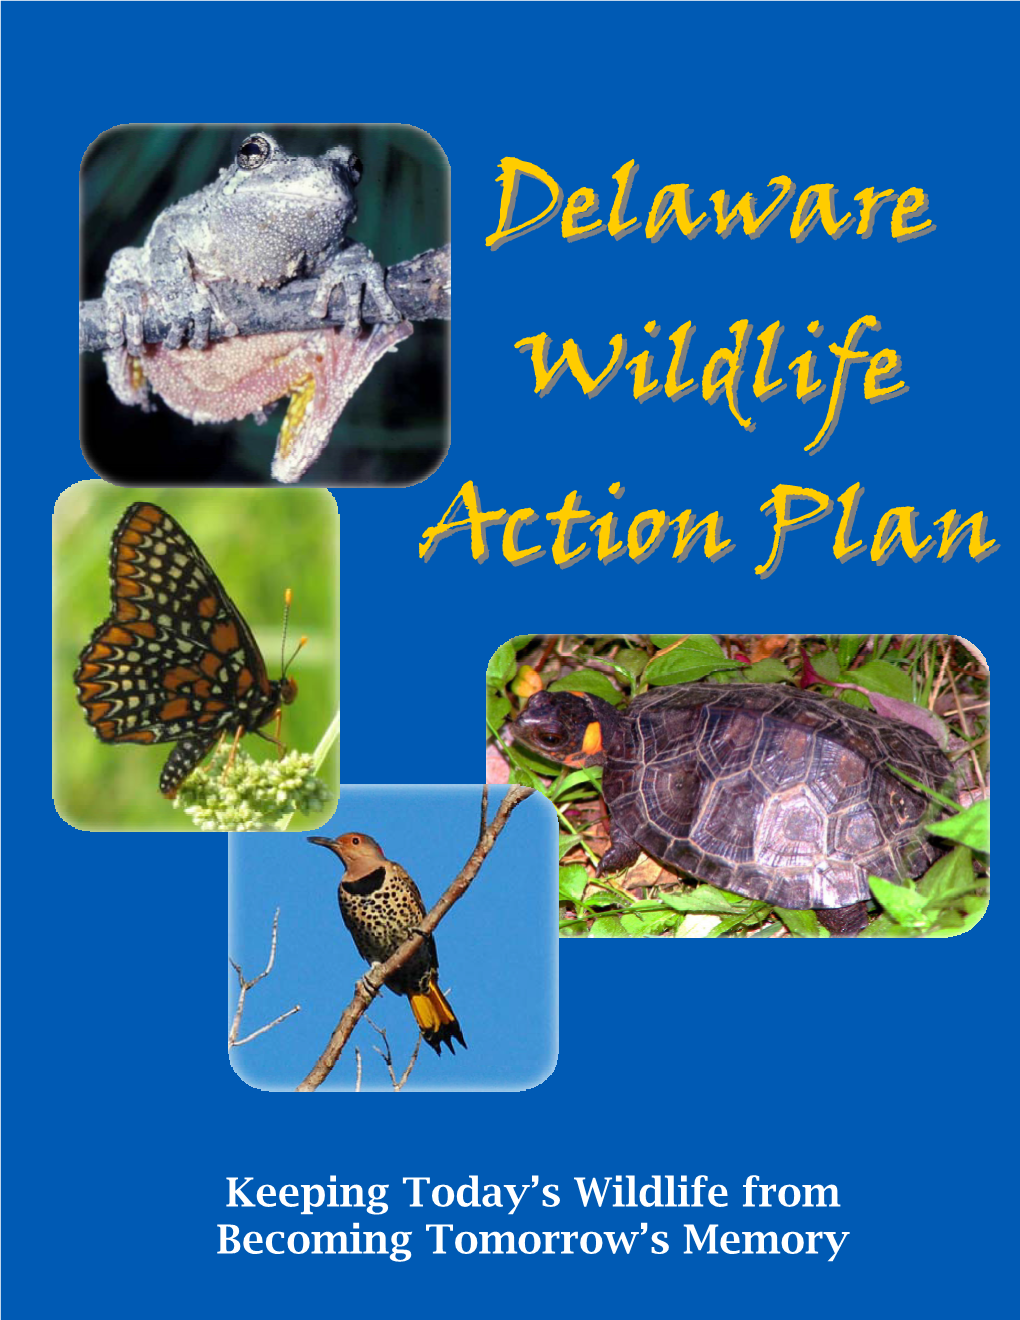 Delaware Wildlife Action Plan 2007 - 2017